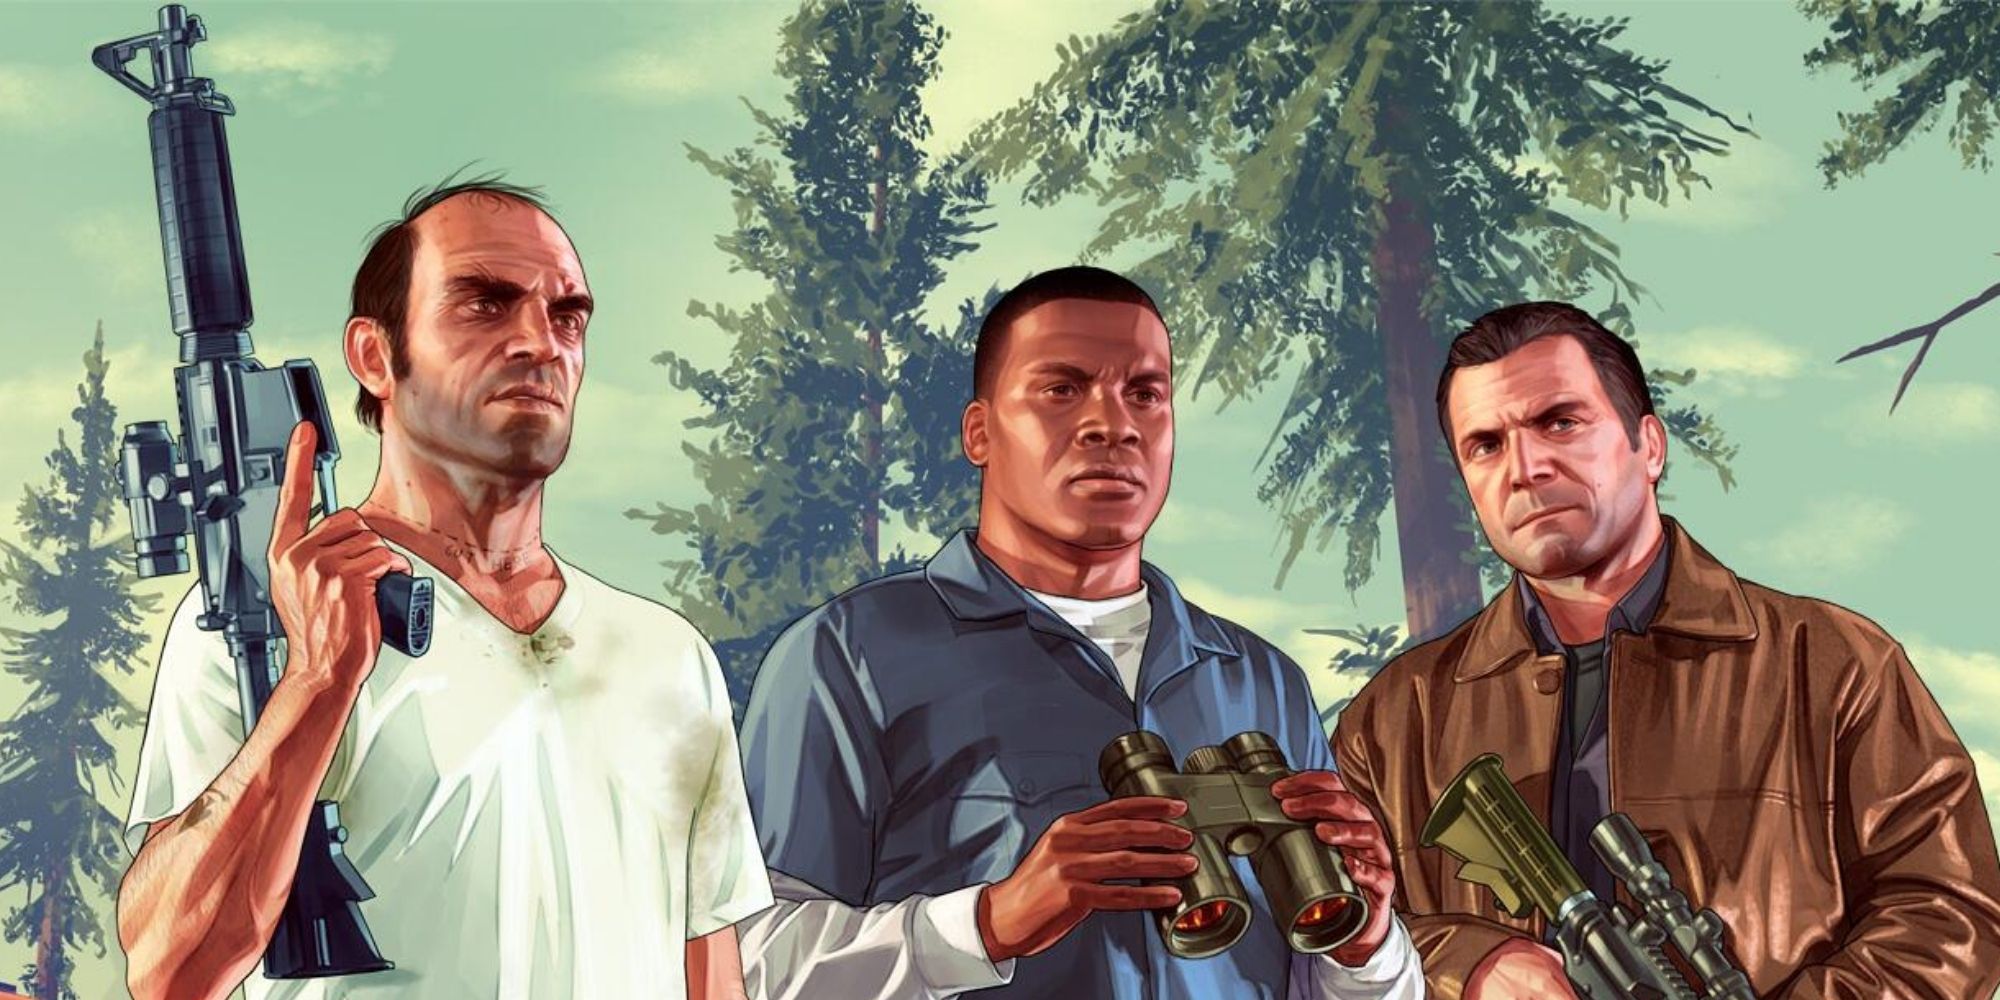 Rockstar Games Responds To 'Grand Theft Auto VI' Leak: We Are